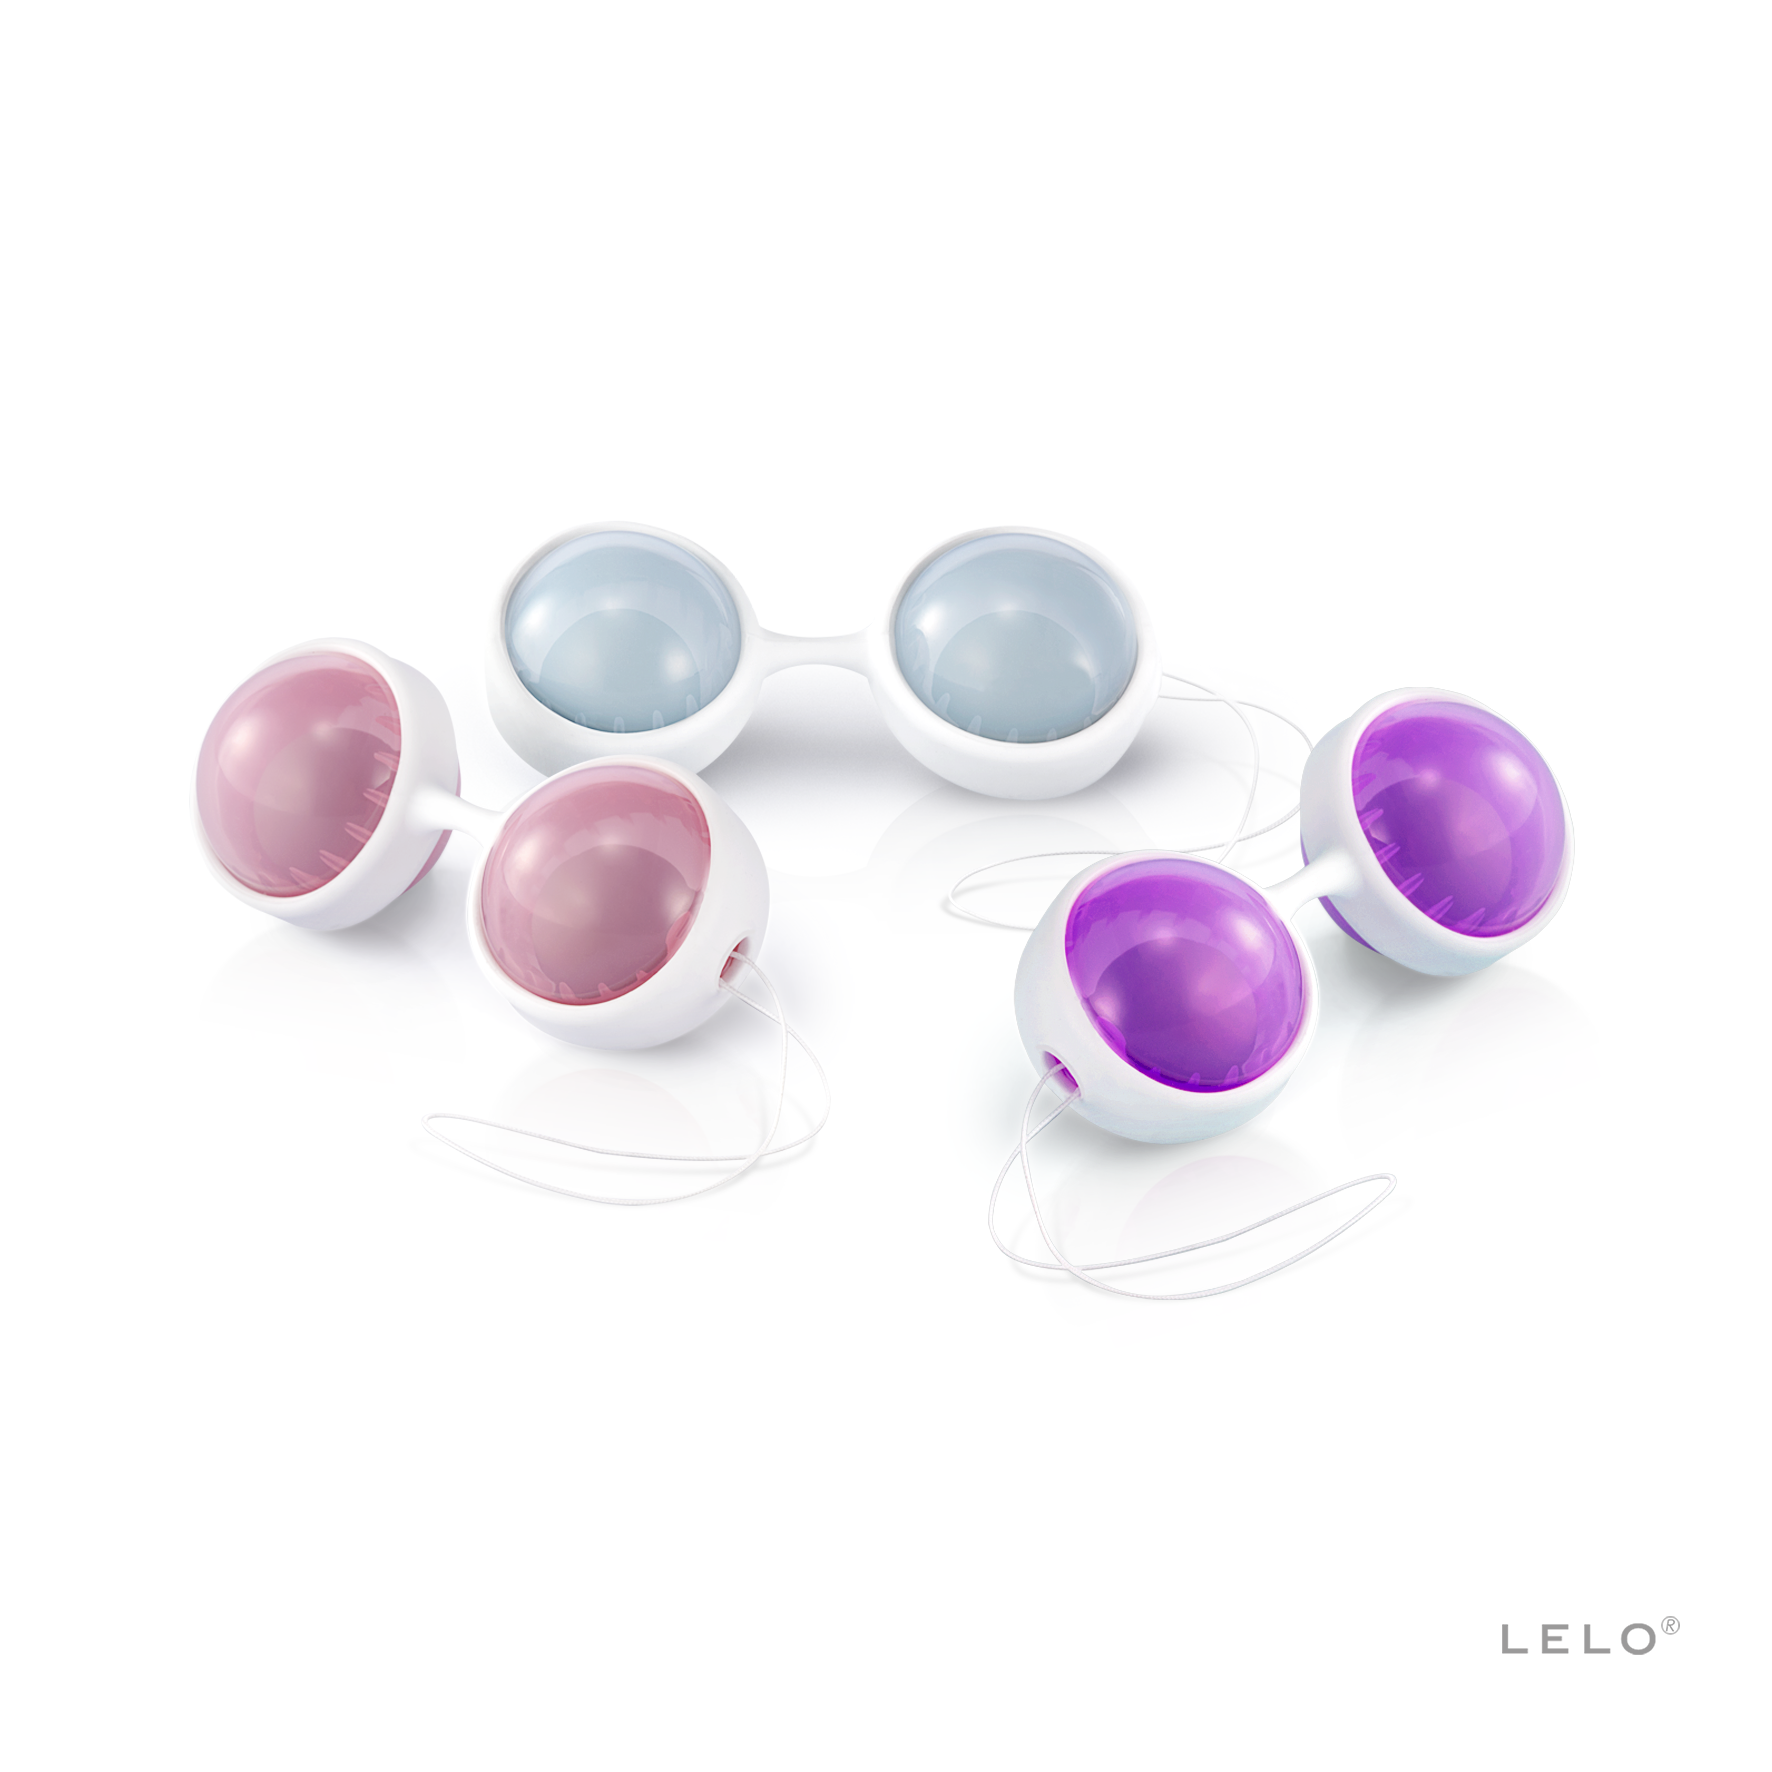 $89 - LELO Beads Plus